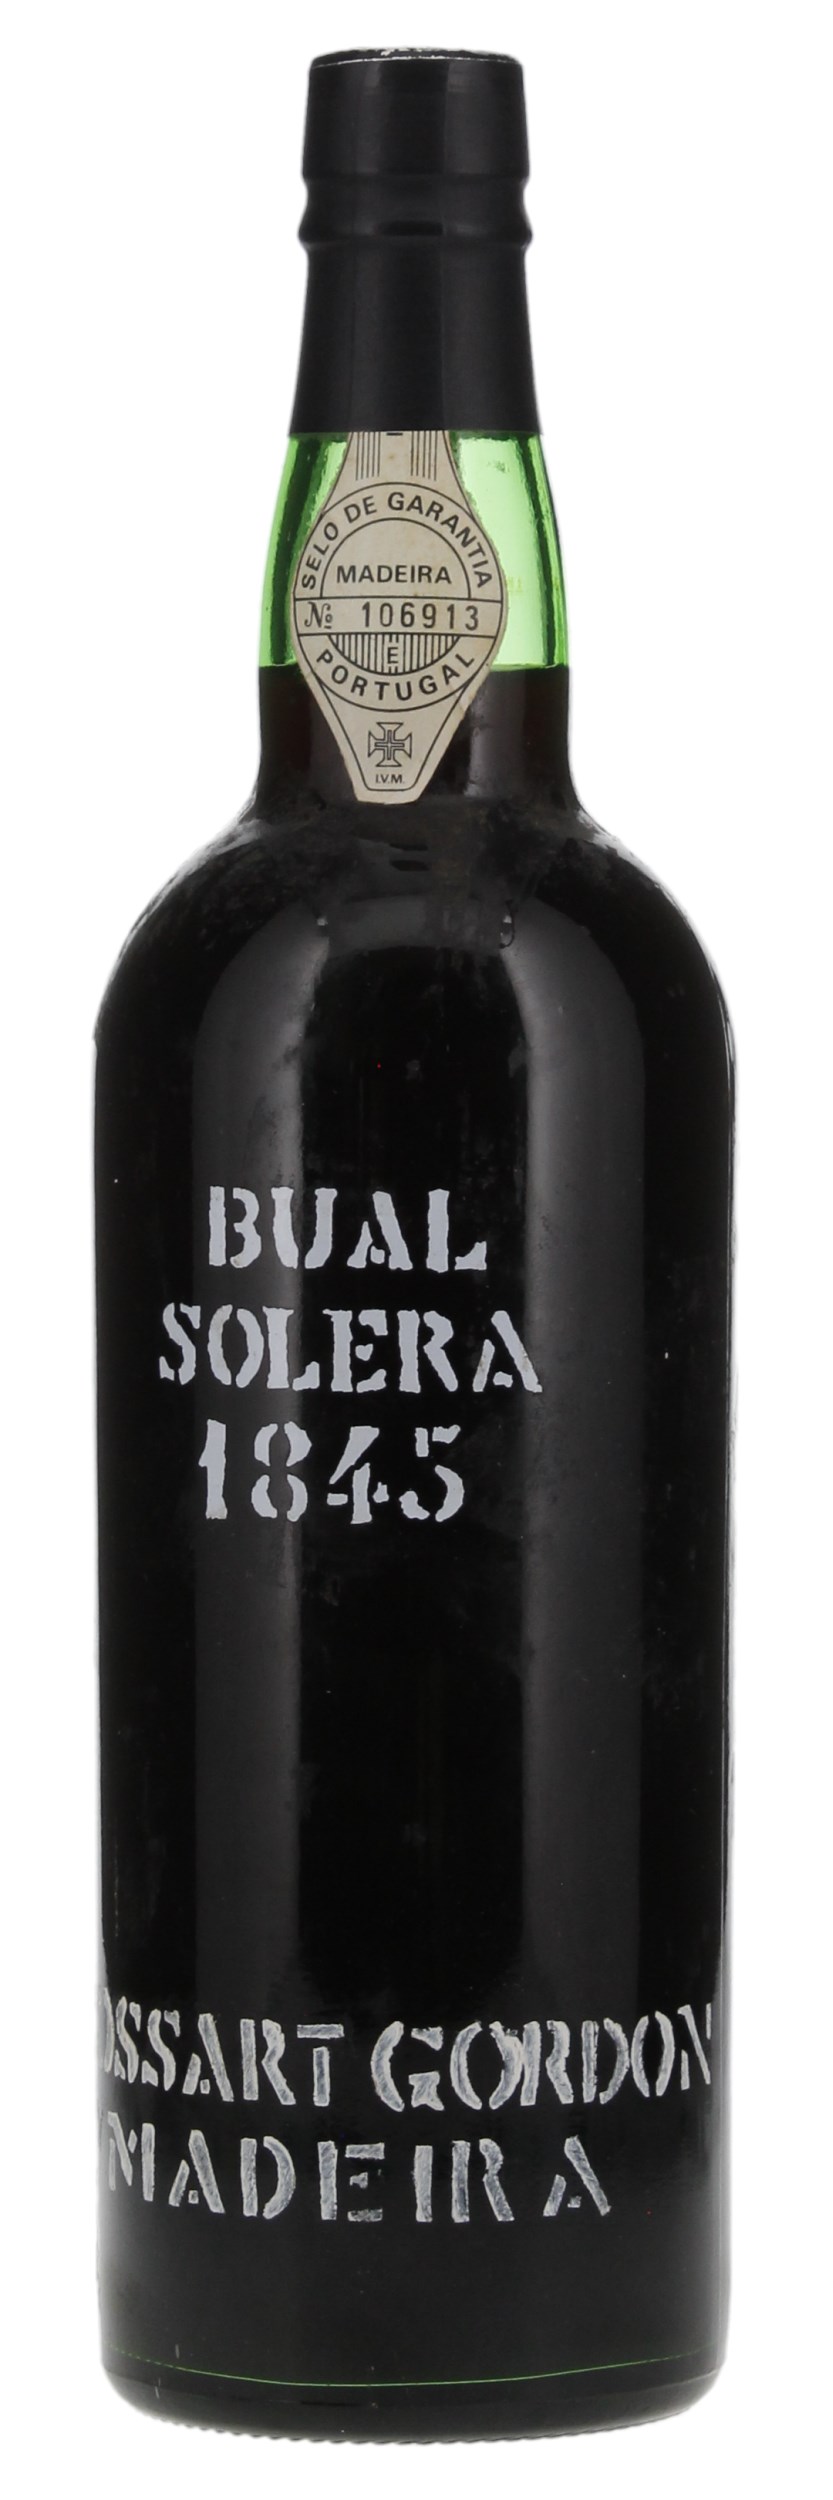 N.V. Cossart Gordon Bual 1845 Solera Madeira, 750ml